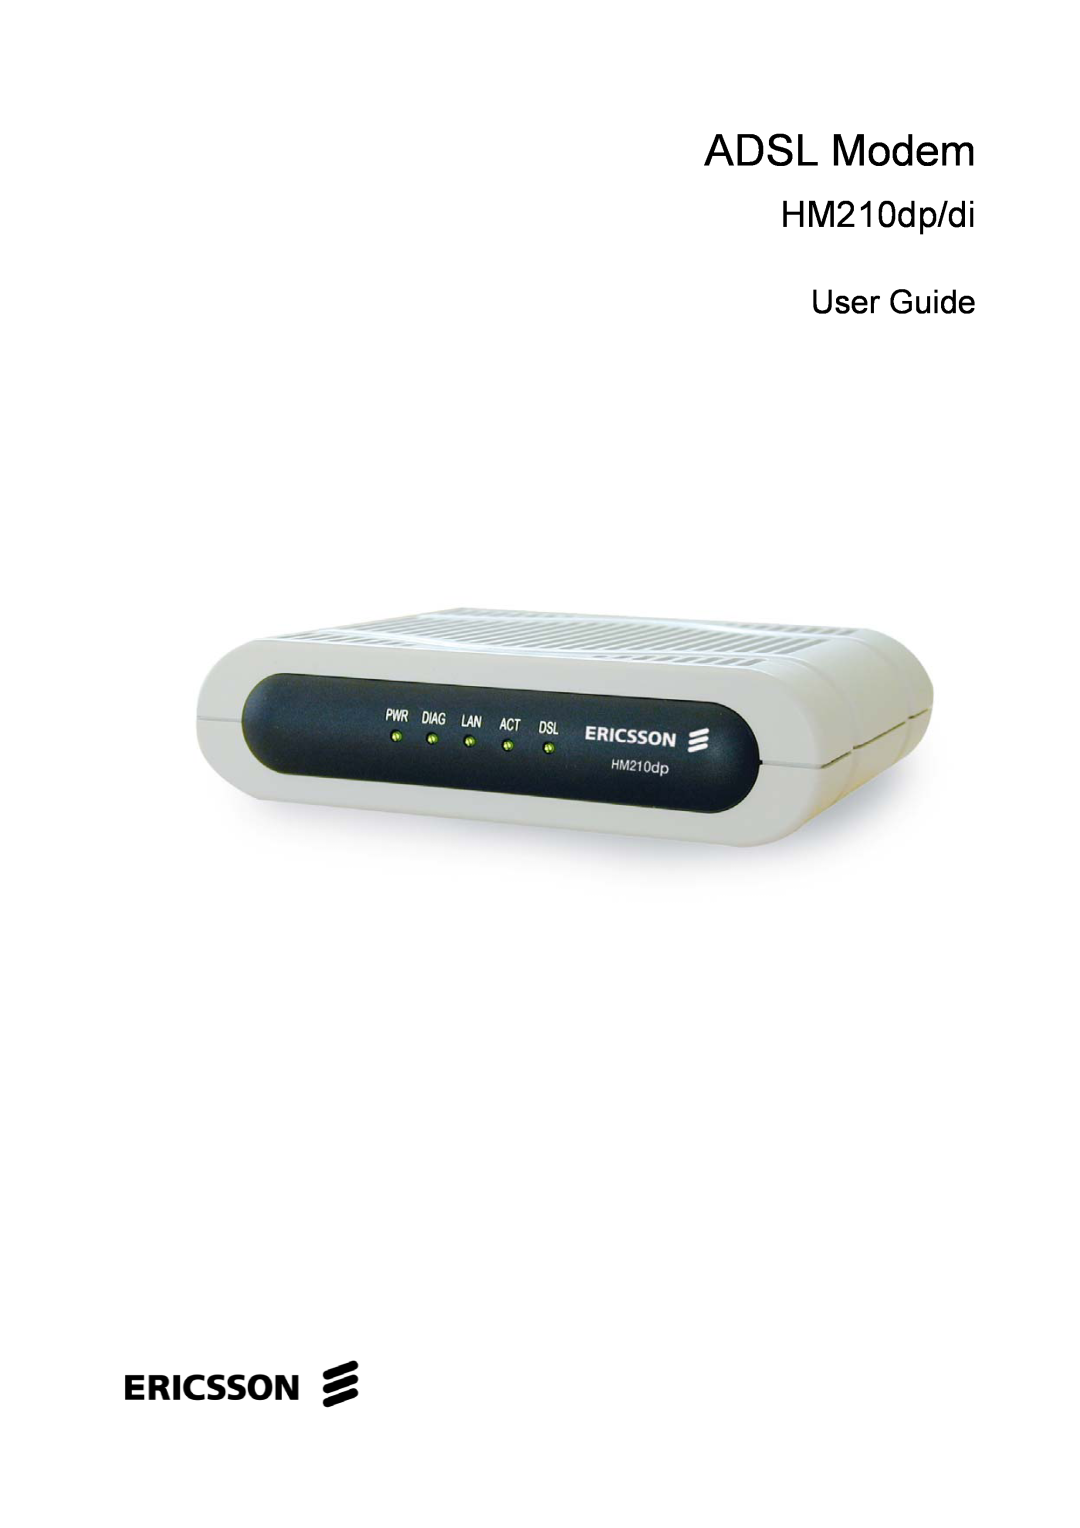 Garmin HM210DP/DI manual ADSL Modem, HM210dp/di, User Guide 